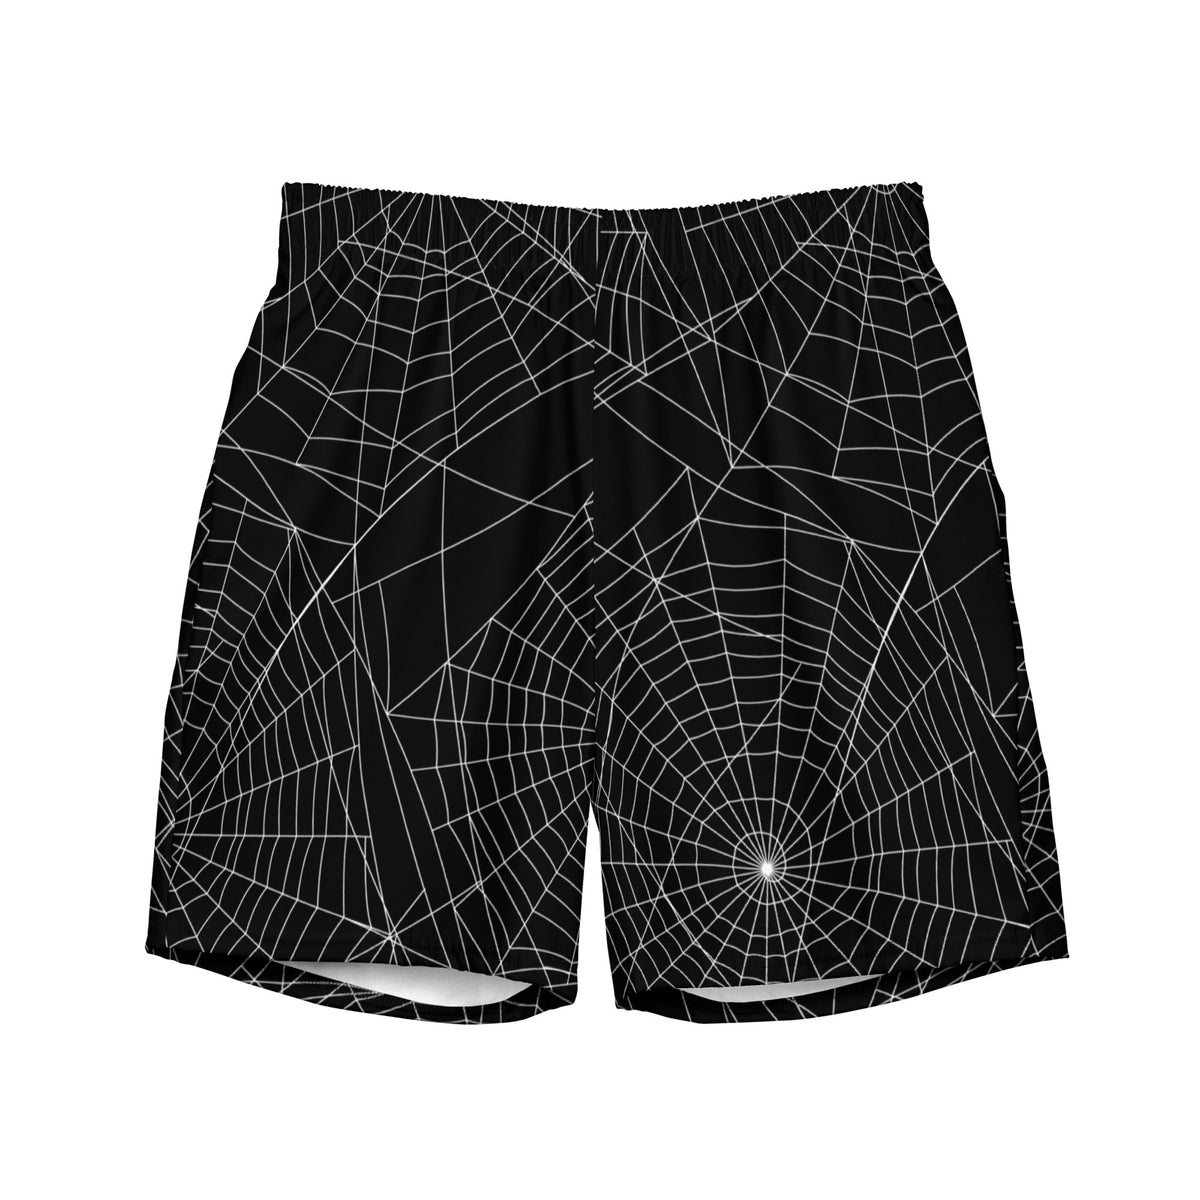 Spider Chic Swim Trunks - Goth Cloth Co.1667551_14636